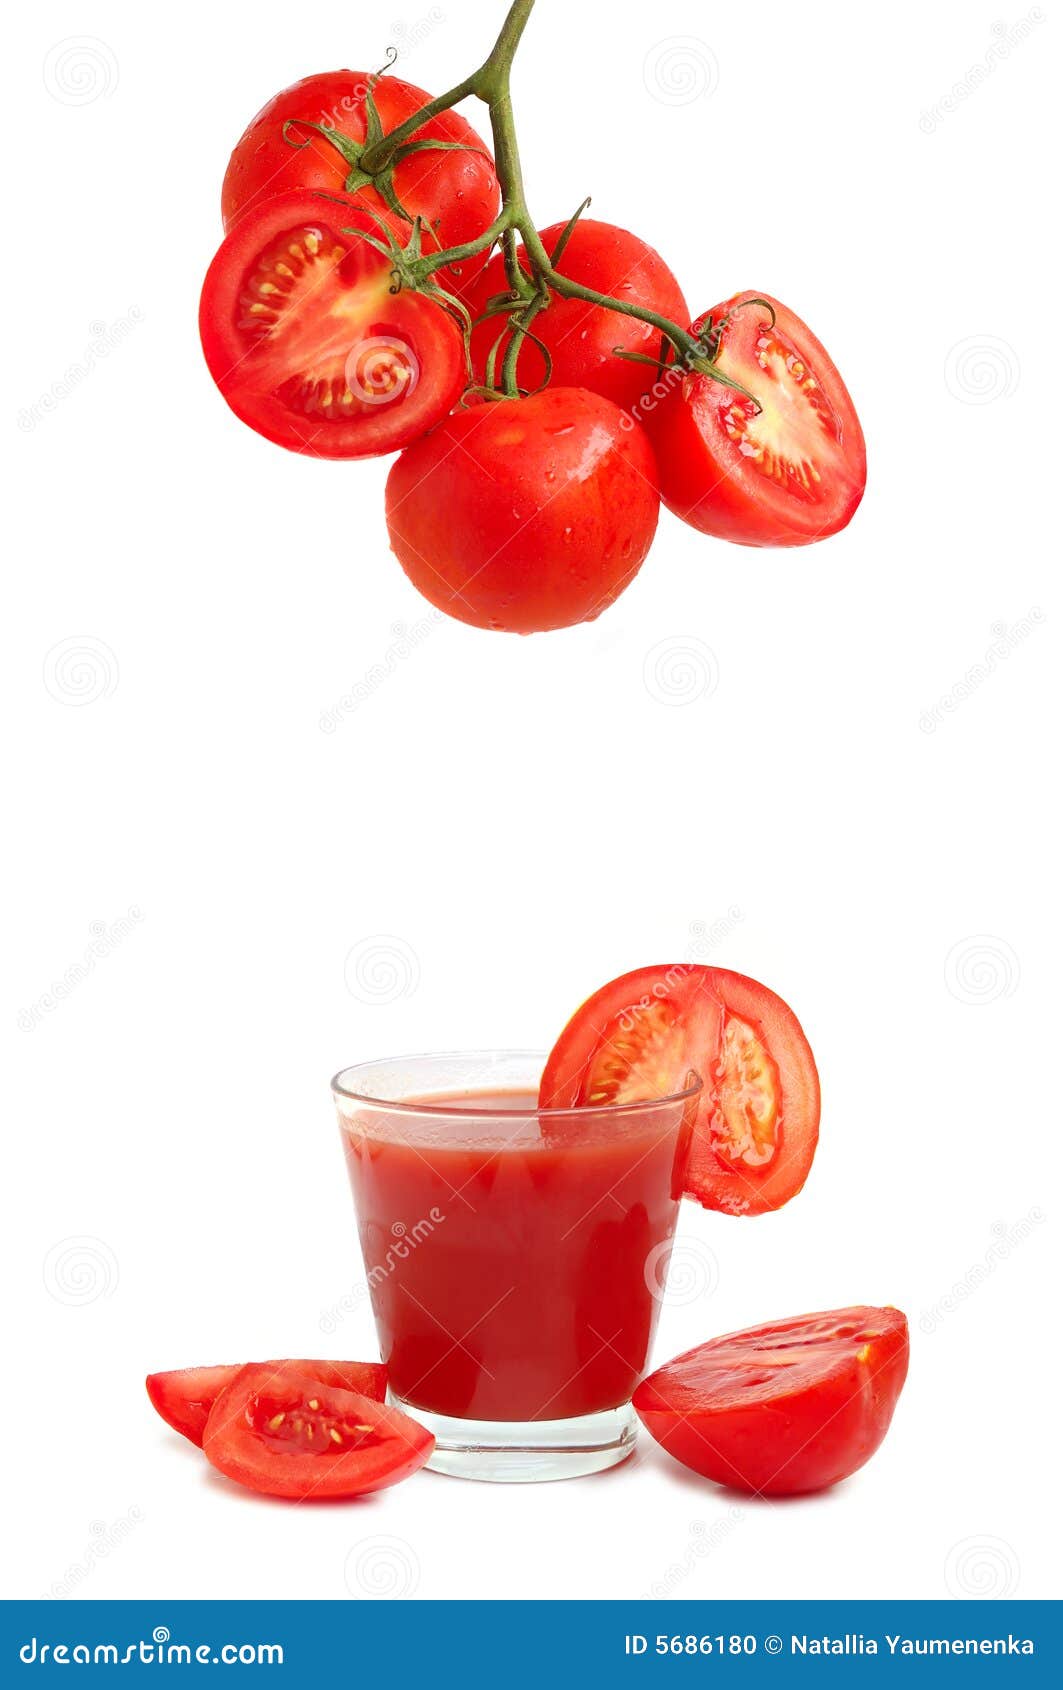 tomato juice clipart - photo #17